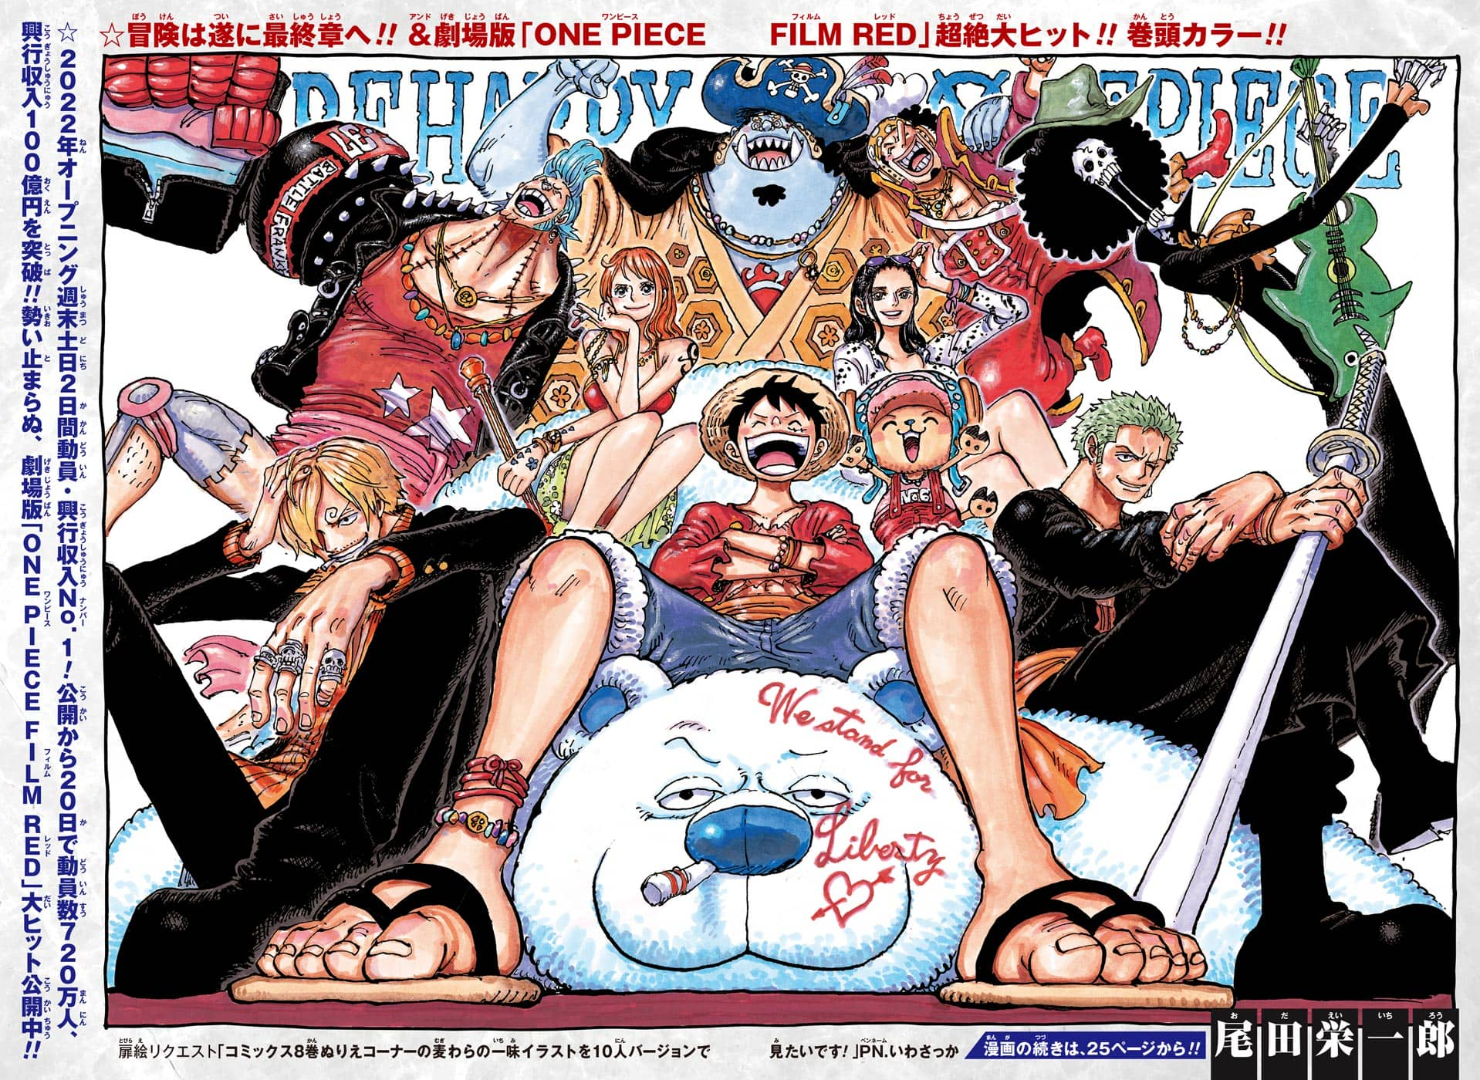 One Piece Chapter 1061 Chapter 1060 | One Piece Wiki | Fandom